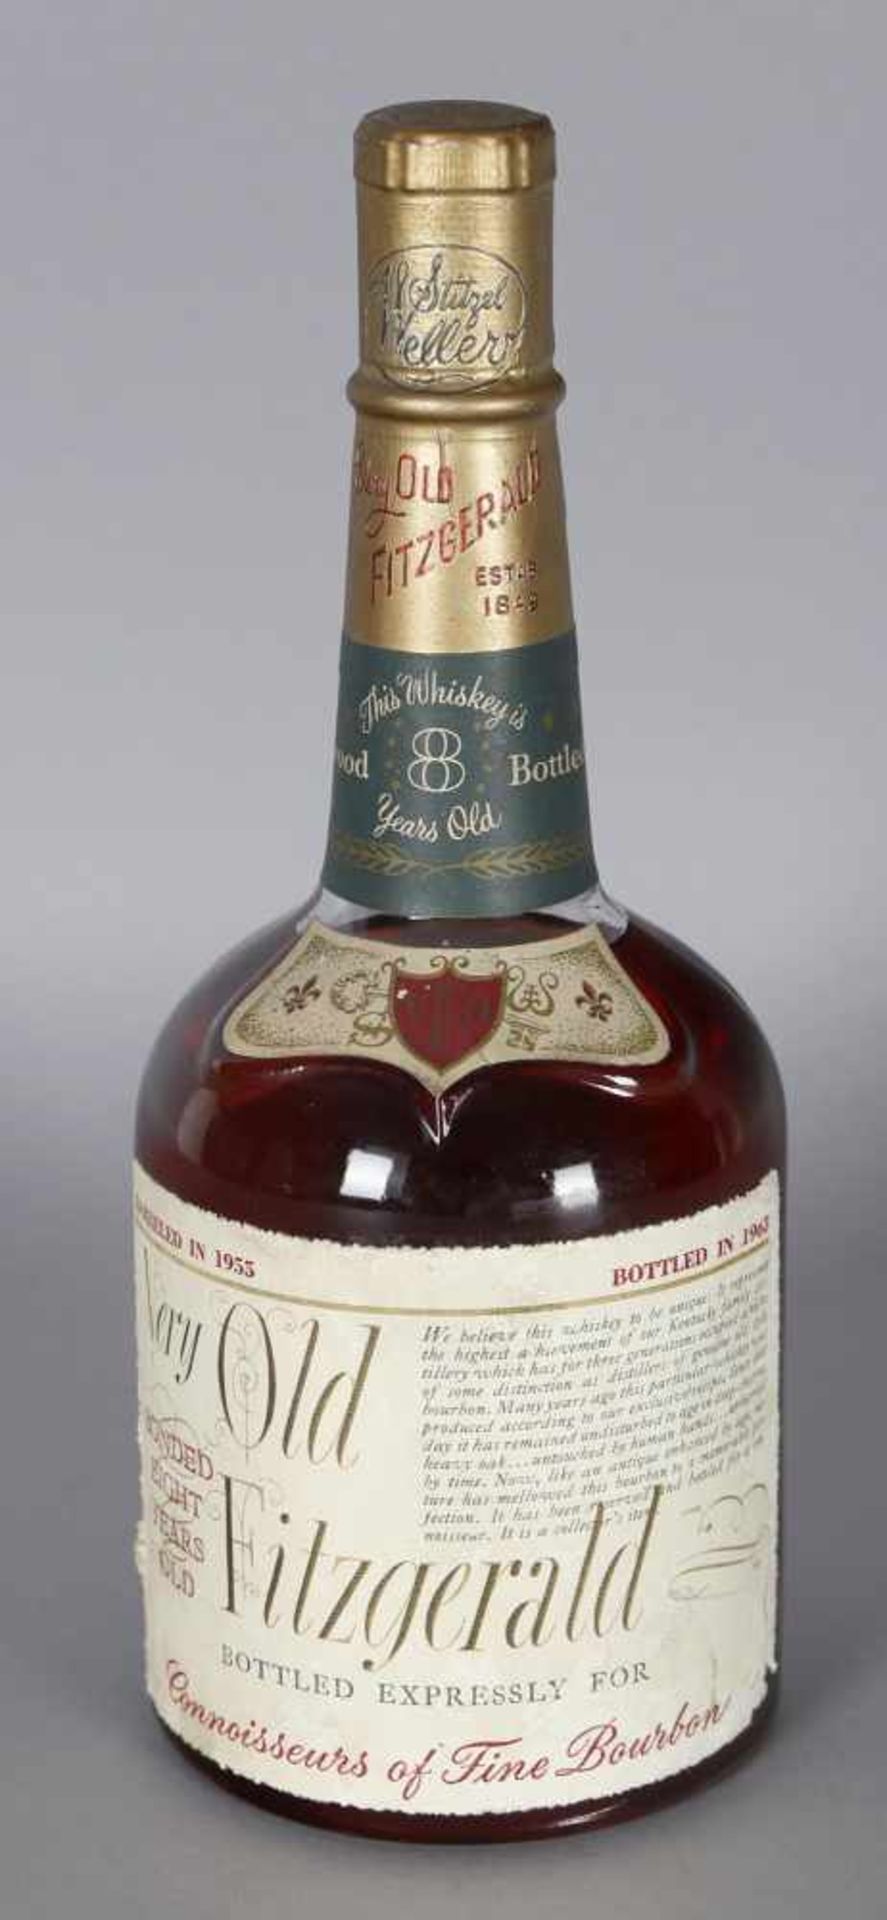 Whisky, Very Old Fitzgerald Jahrgang 1955, abgefüllt 1963Brennerei Stitzel-Weller, 8 Jahre alt aus